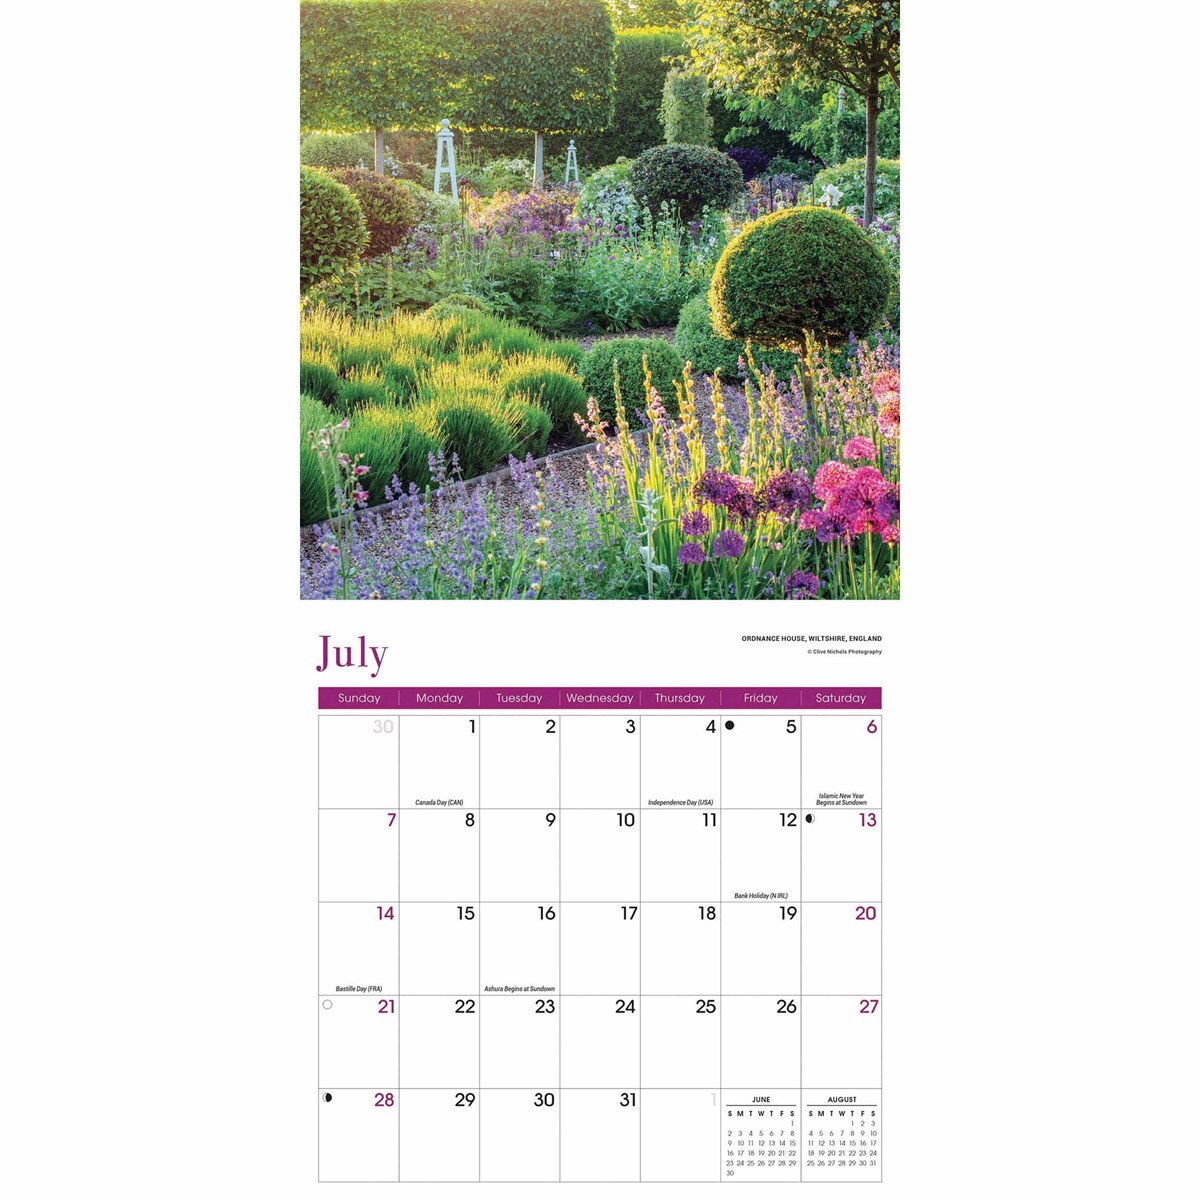 Gardens Mini Calendar 2024